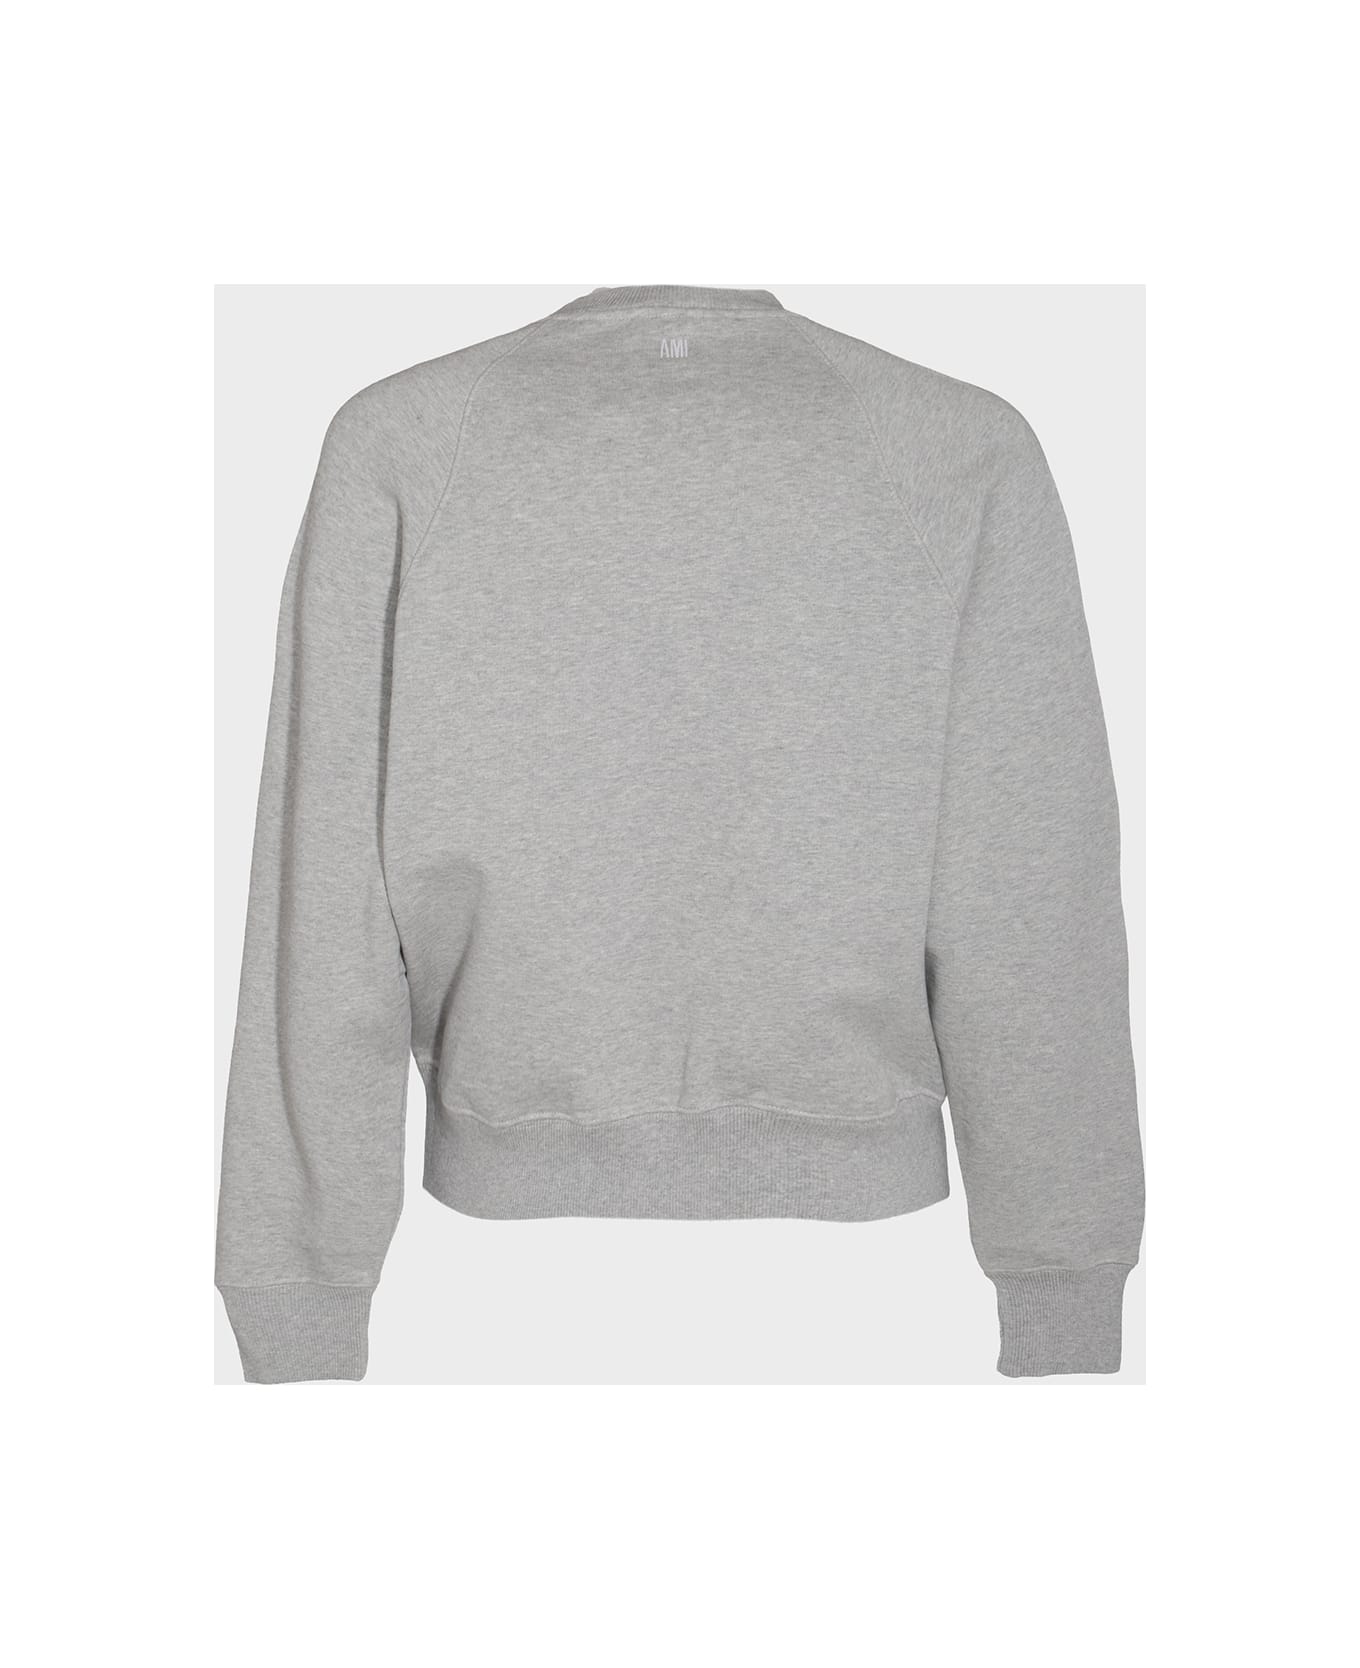 Ami Alexandre Mattiussi Grey Cotton Sweatshirt - HEATHER ASH GREY